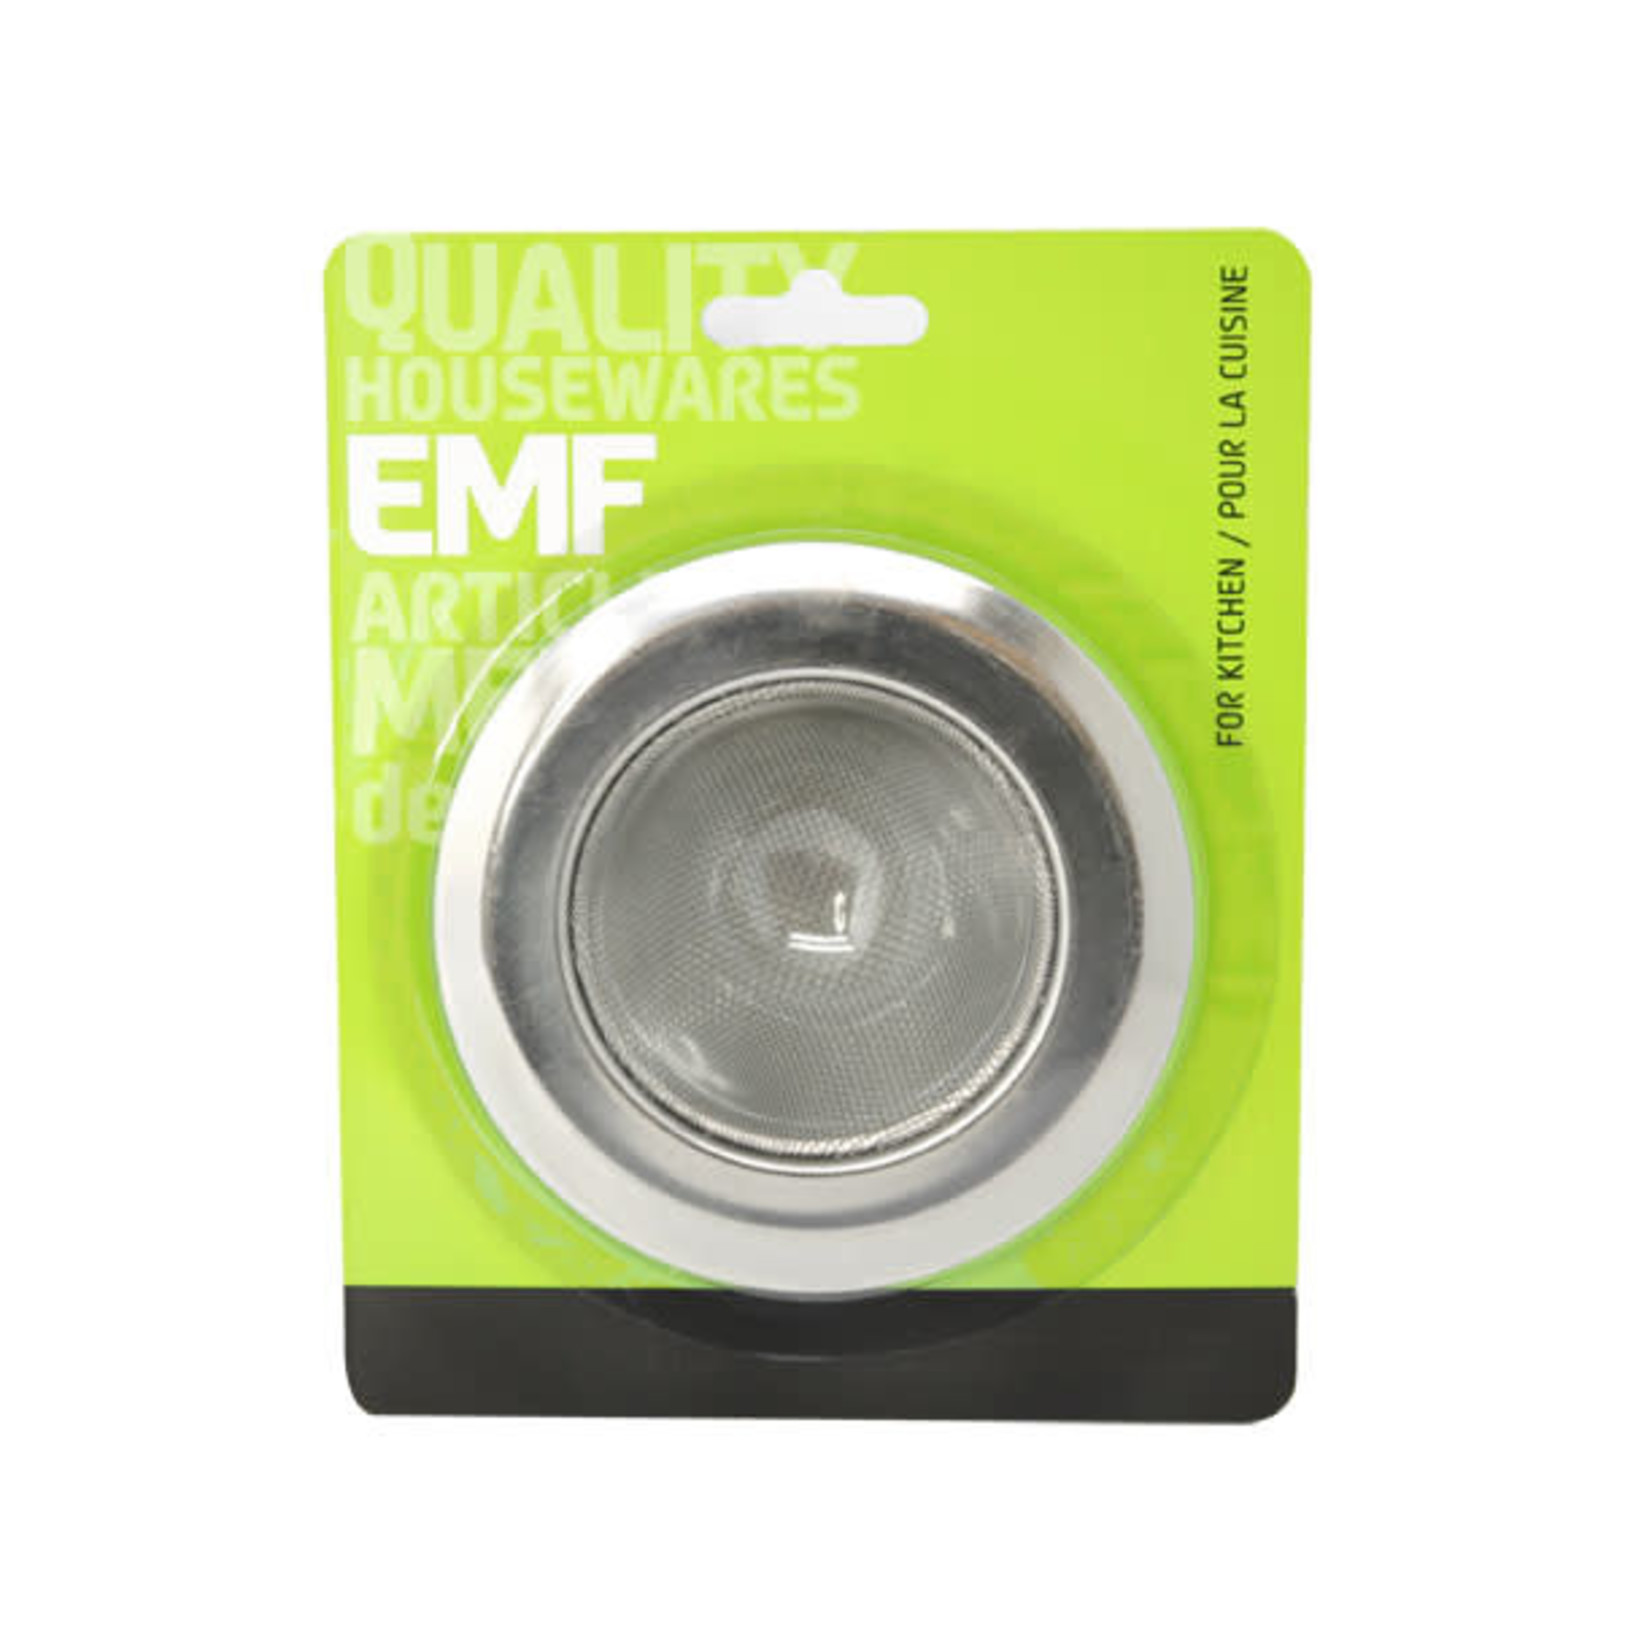 EMF EMF Rimmed Sink Strainer 4.5" - Stainless